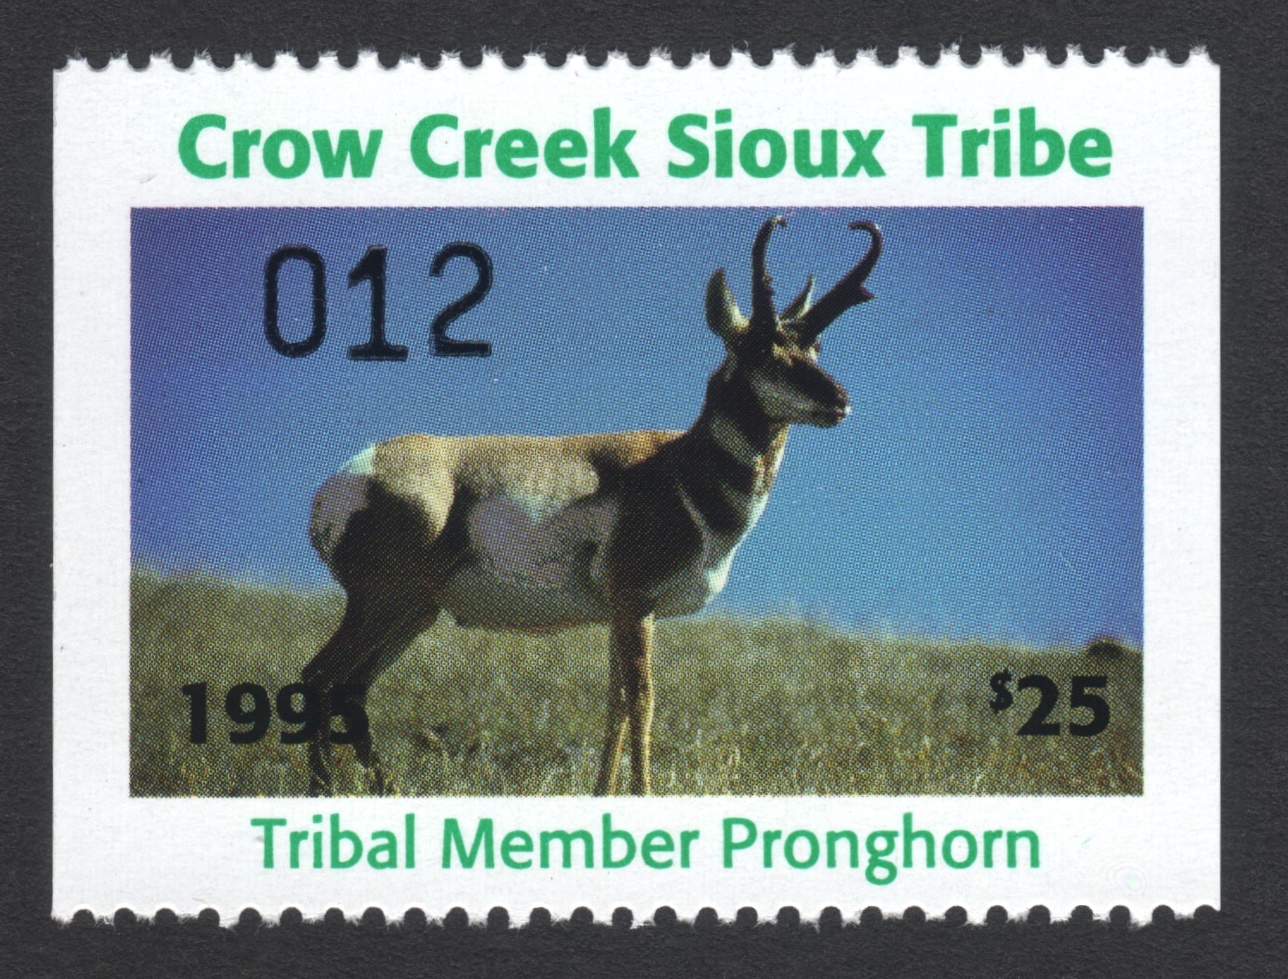 1995 Crow Creek Tribal Member Pronghorn